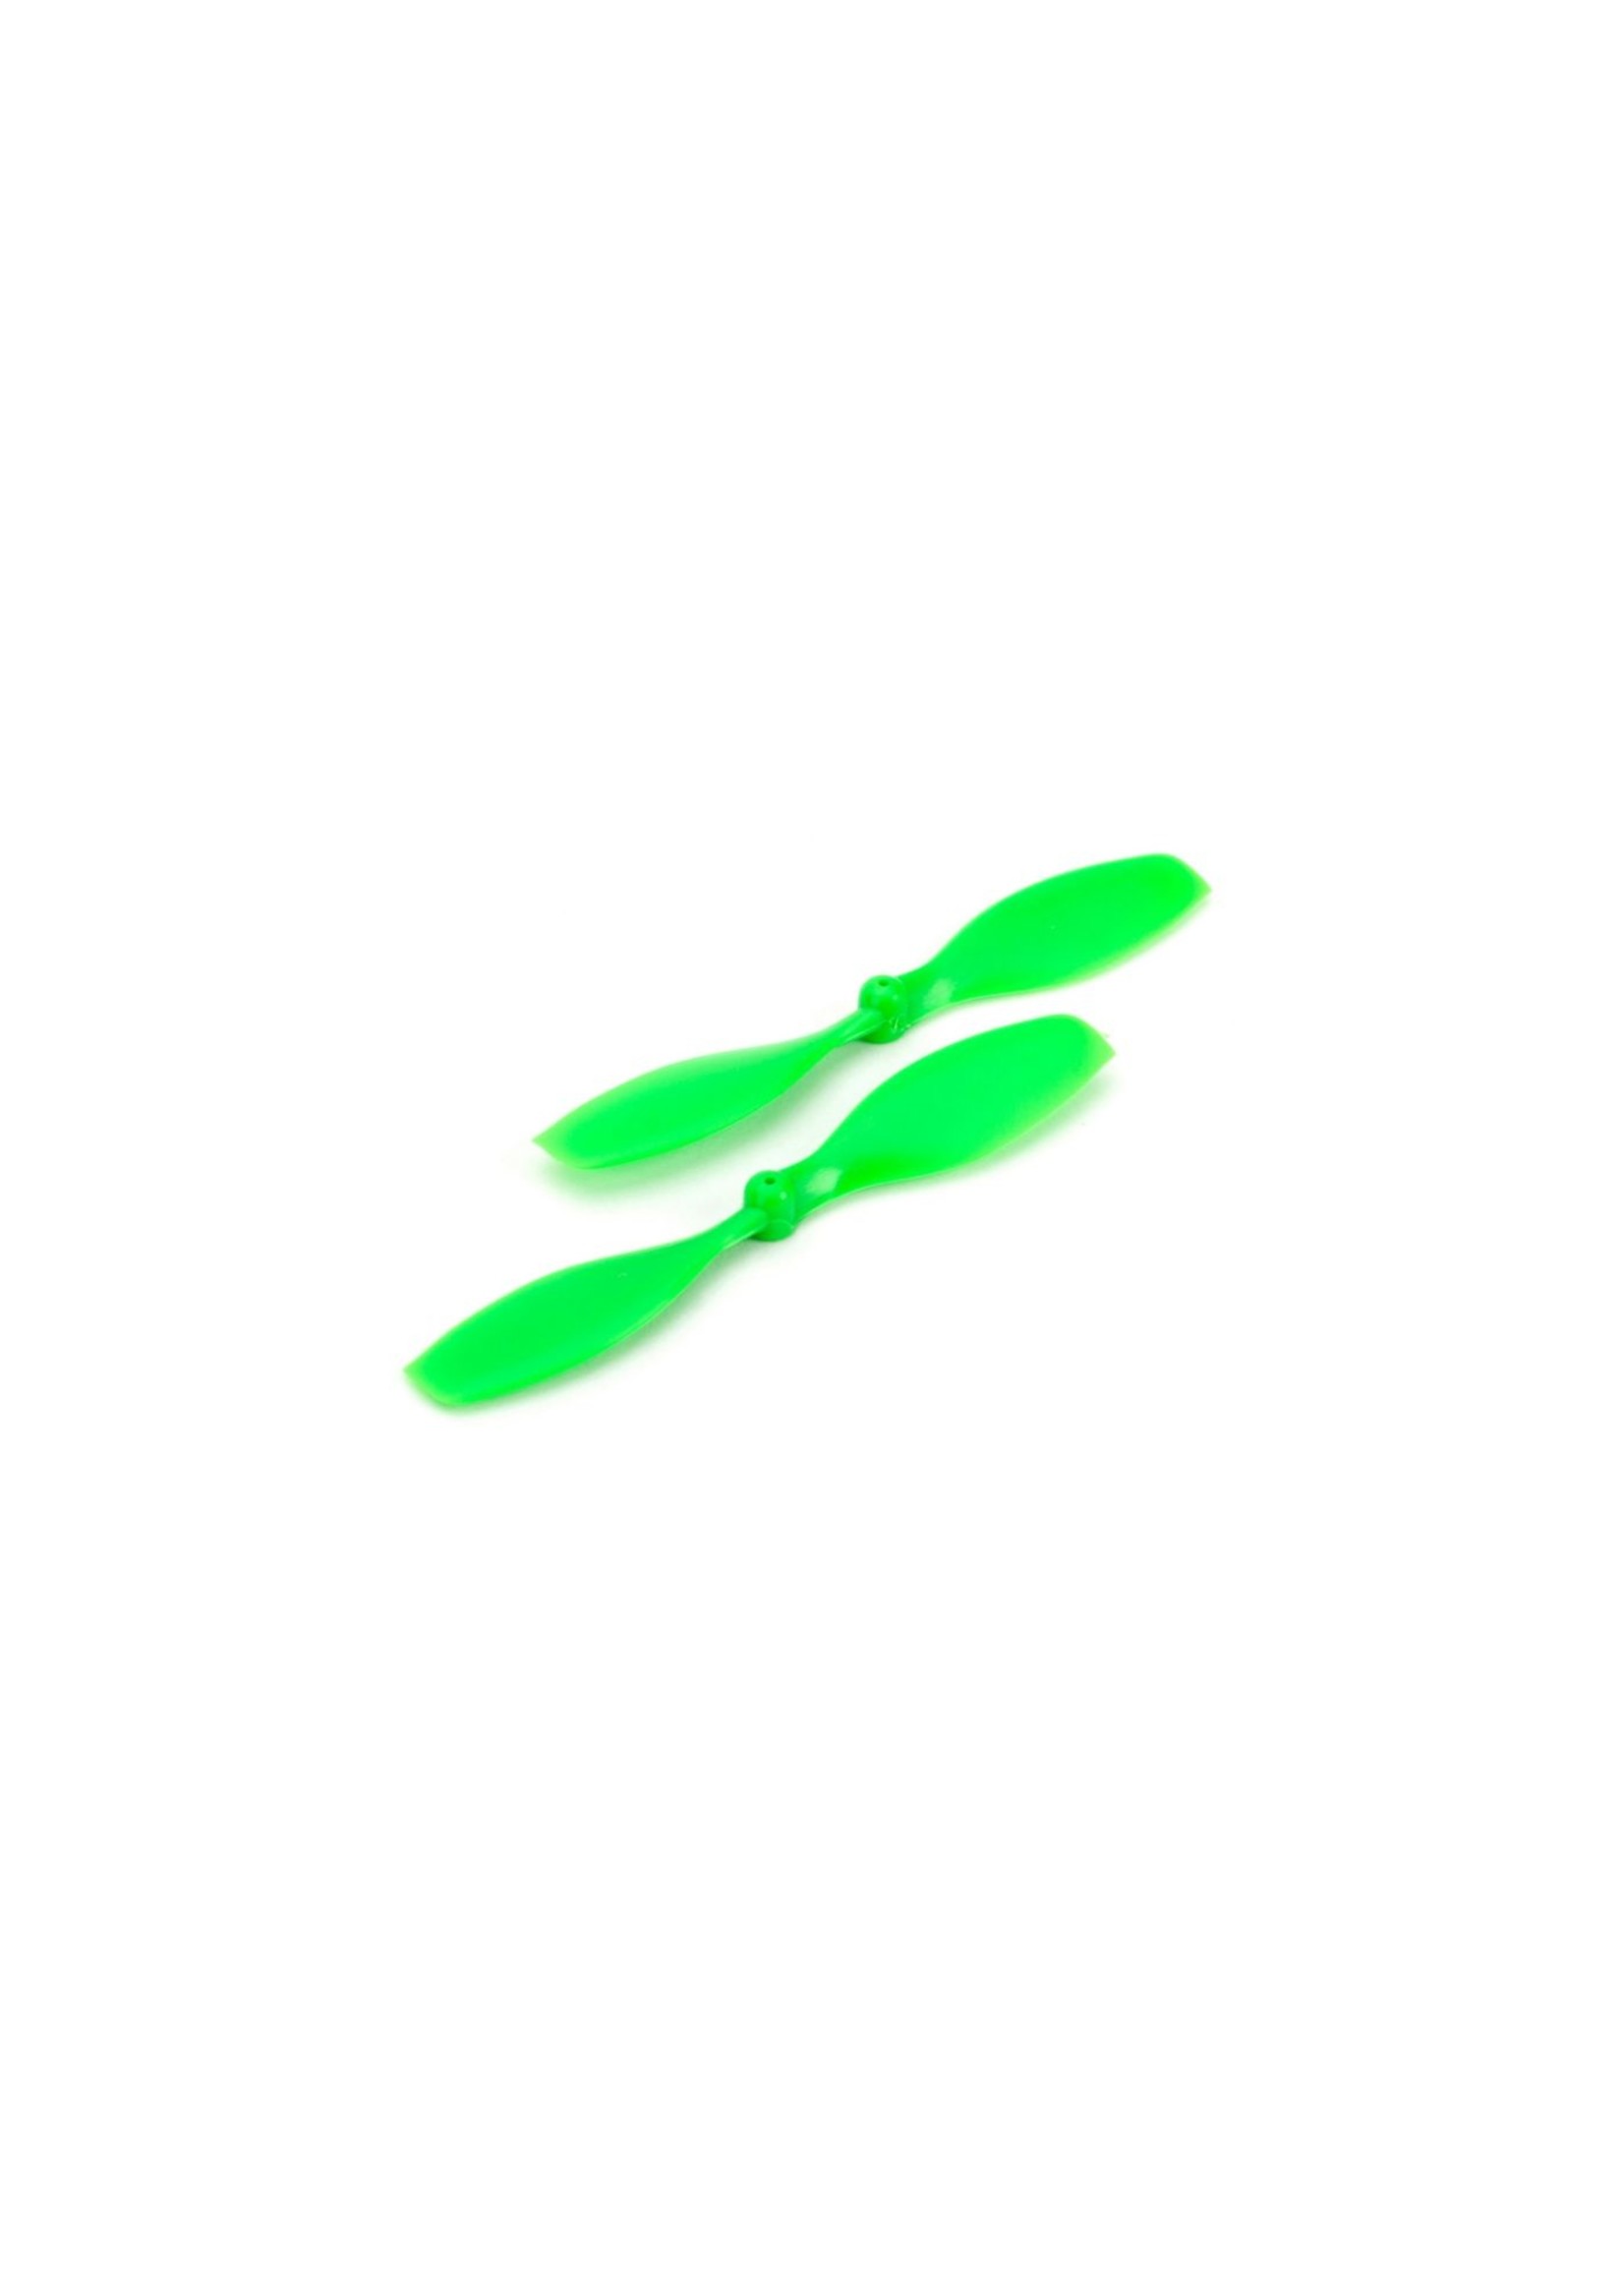 Blade 7621G - Prop, Counter-Clockwise Rotation, Green (2): Nano QX